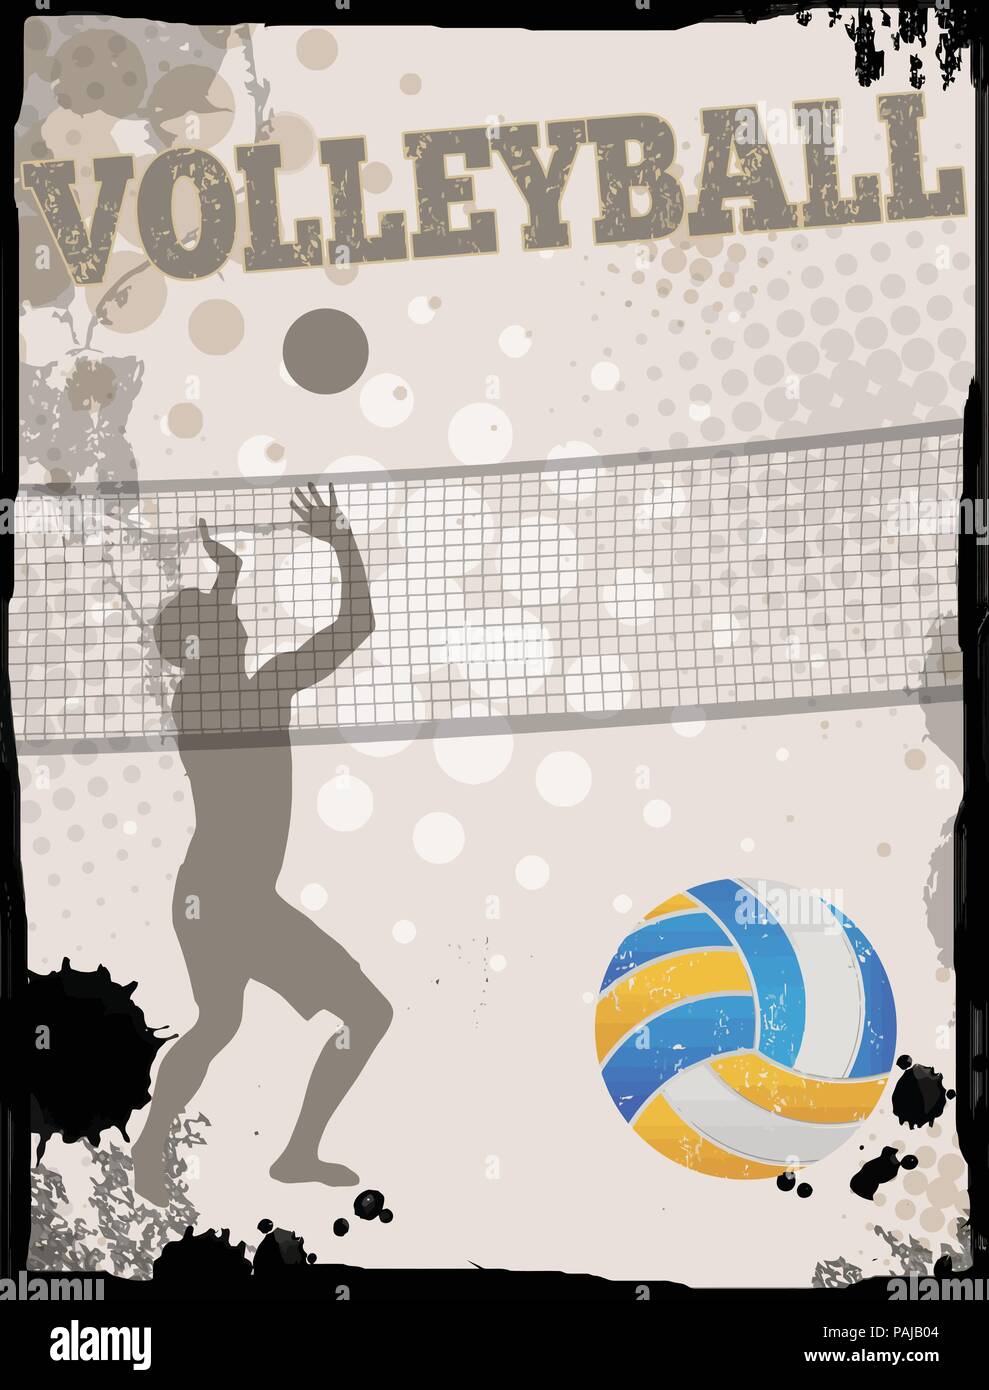 Volley-ball grungy poster background, vector illustration Illustration de Vecteur